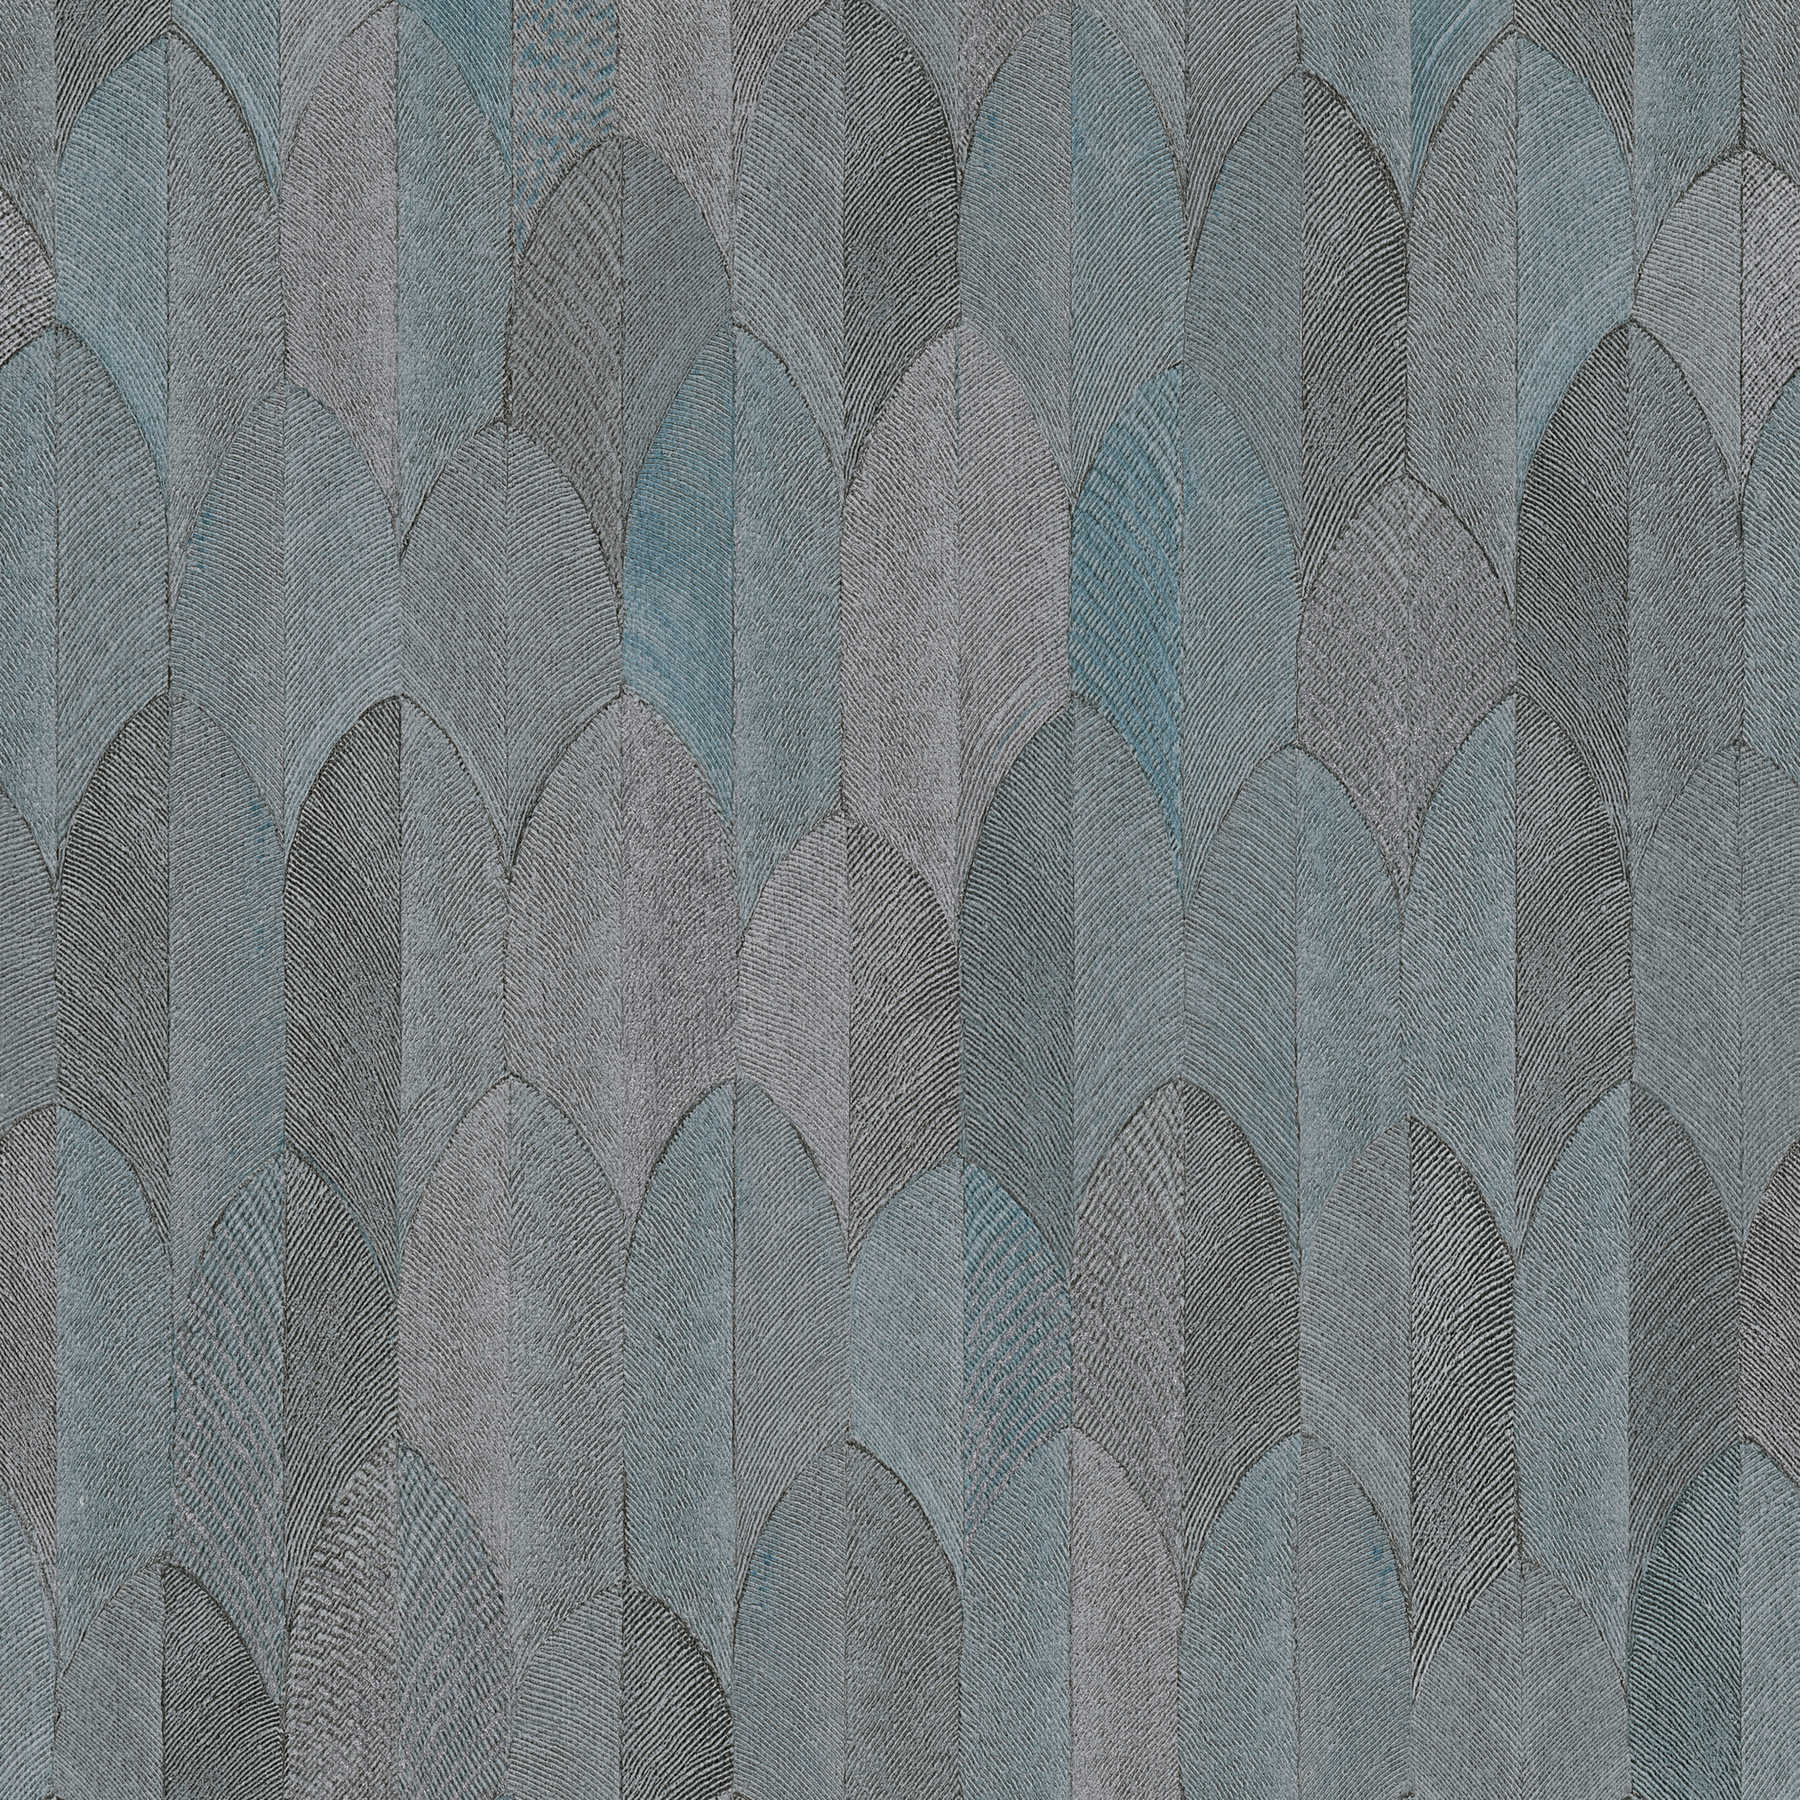 Symetric design wallpaper with metallic effect - grey, blue, black
